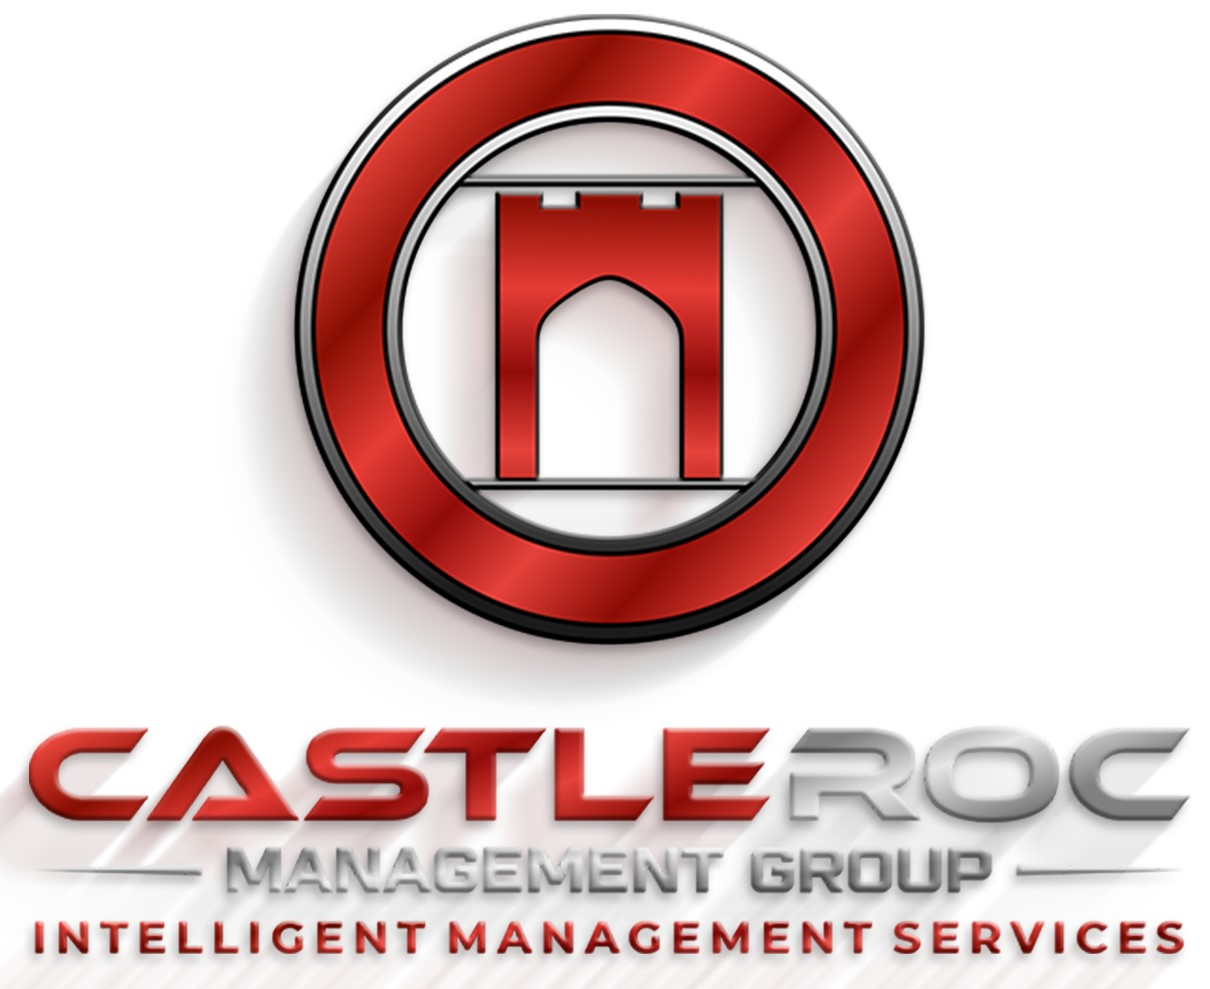 CastleRoc Information Services